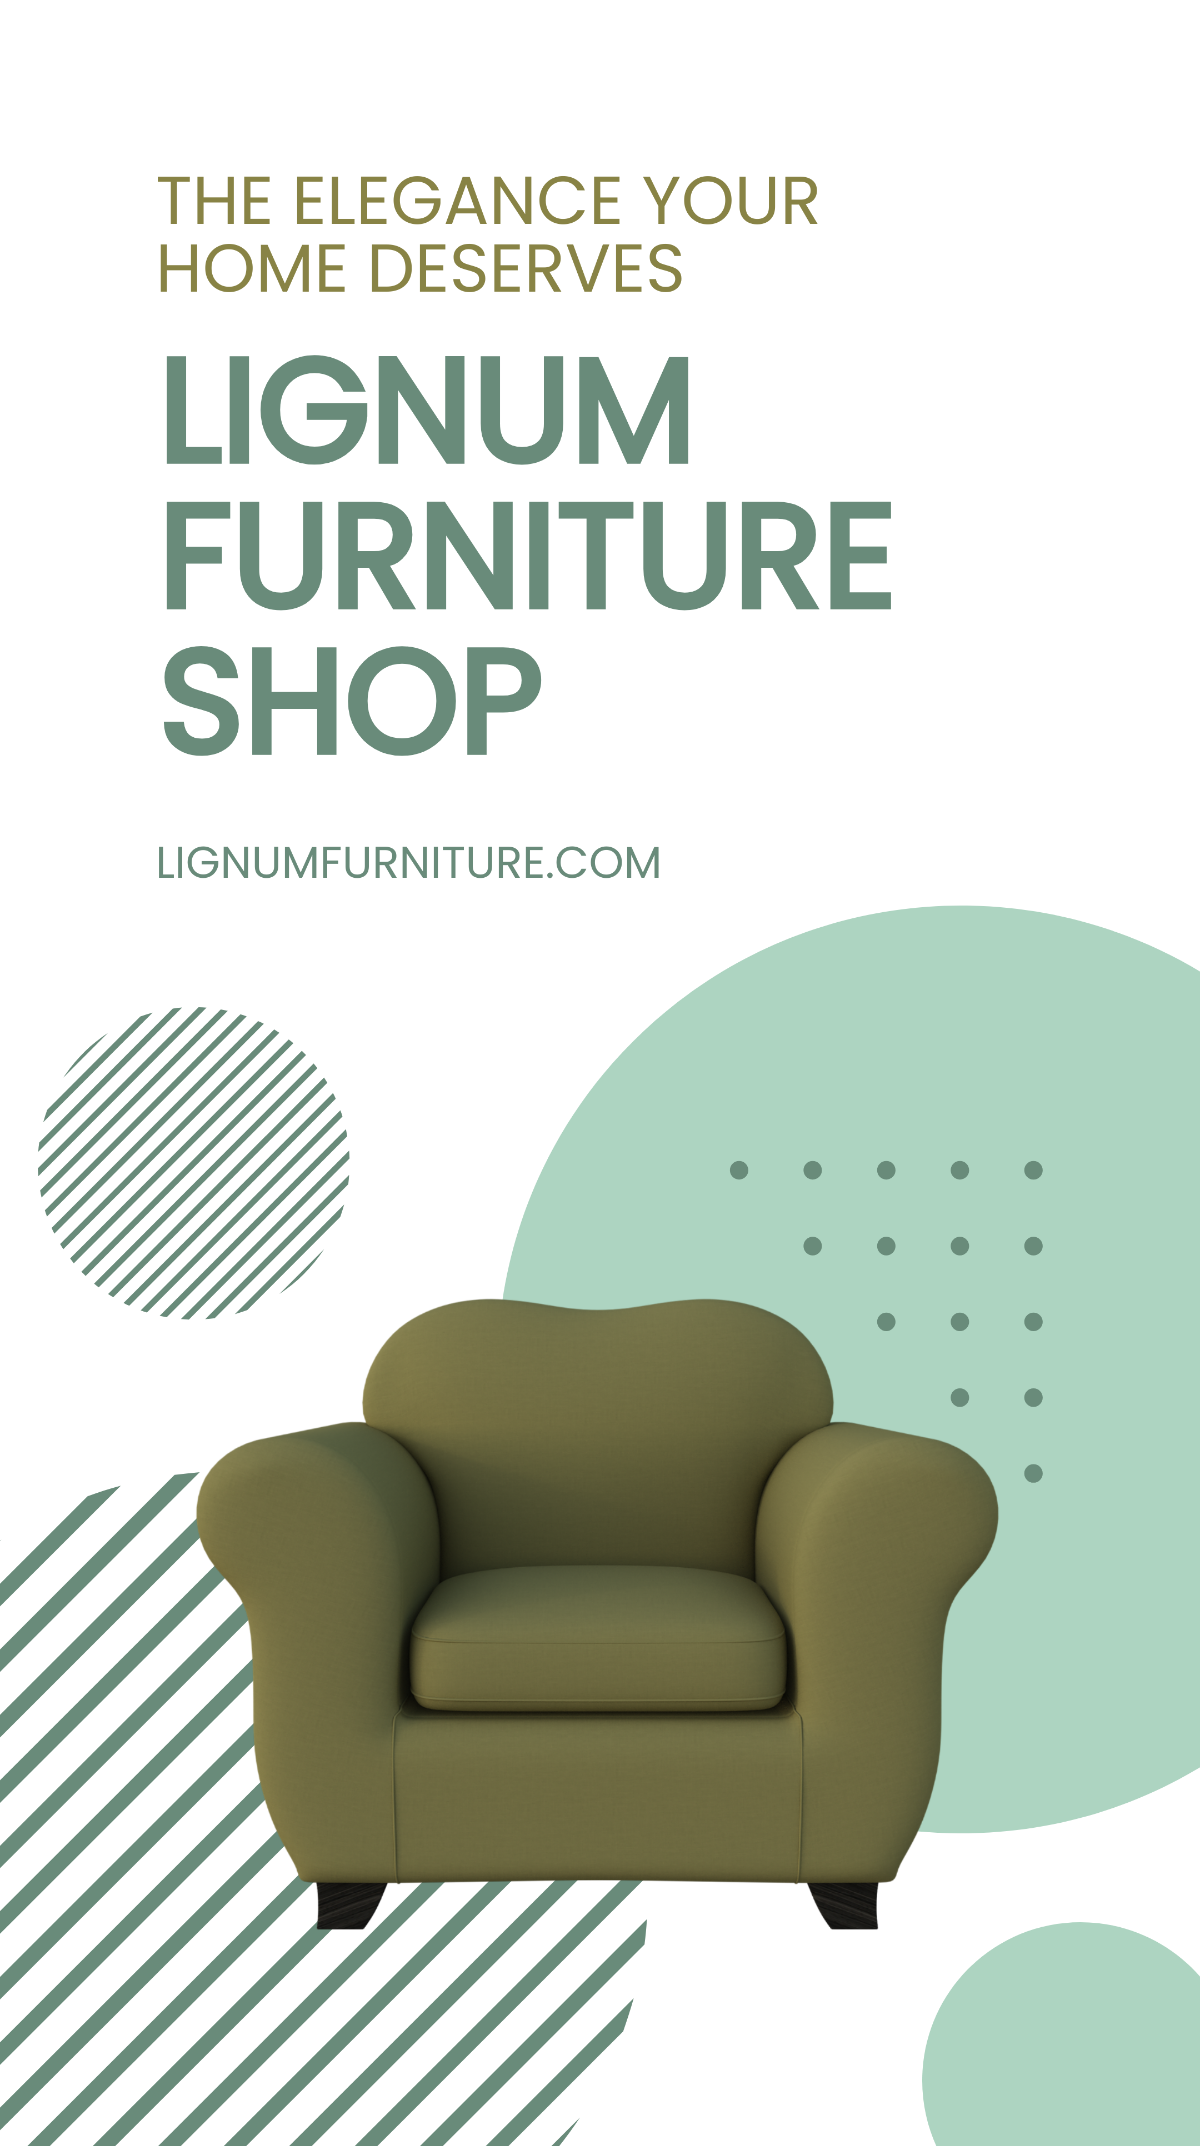 Free home furniture samples